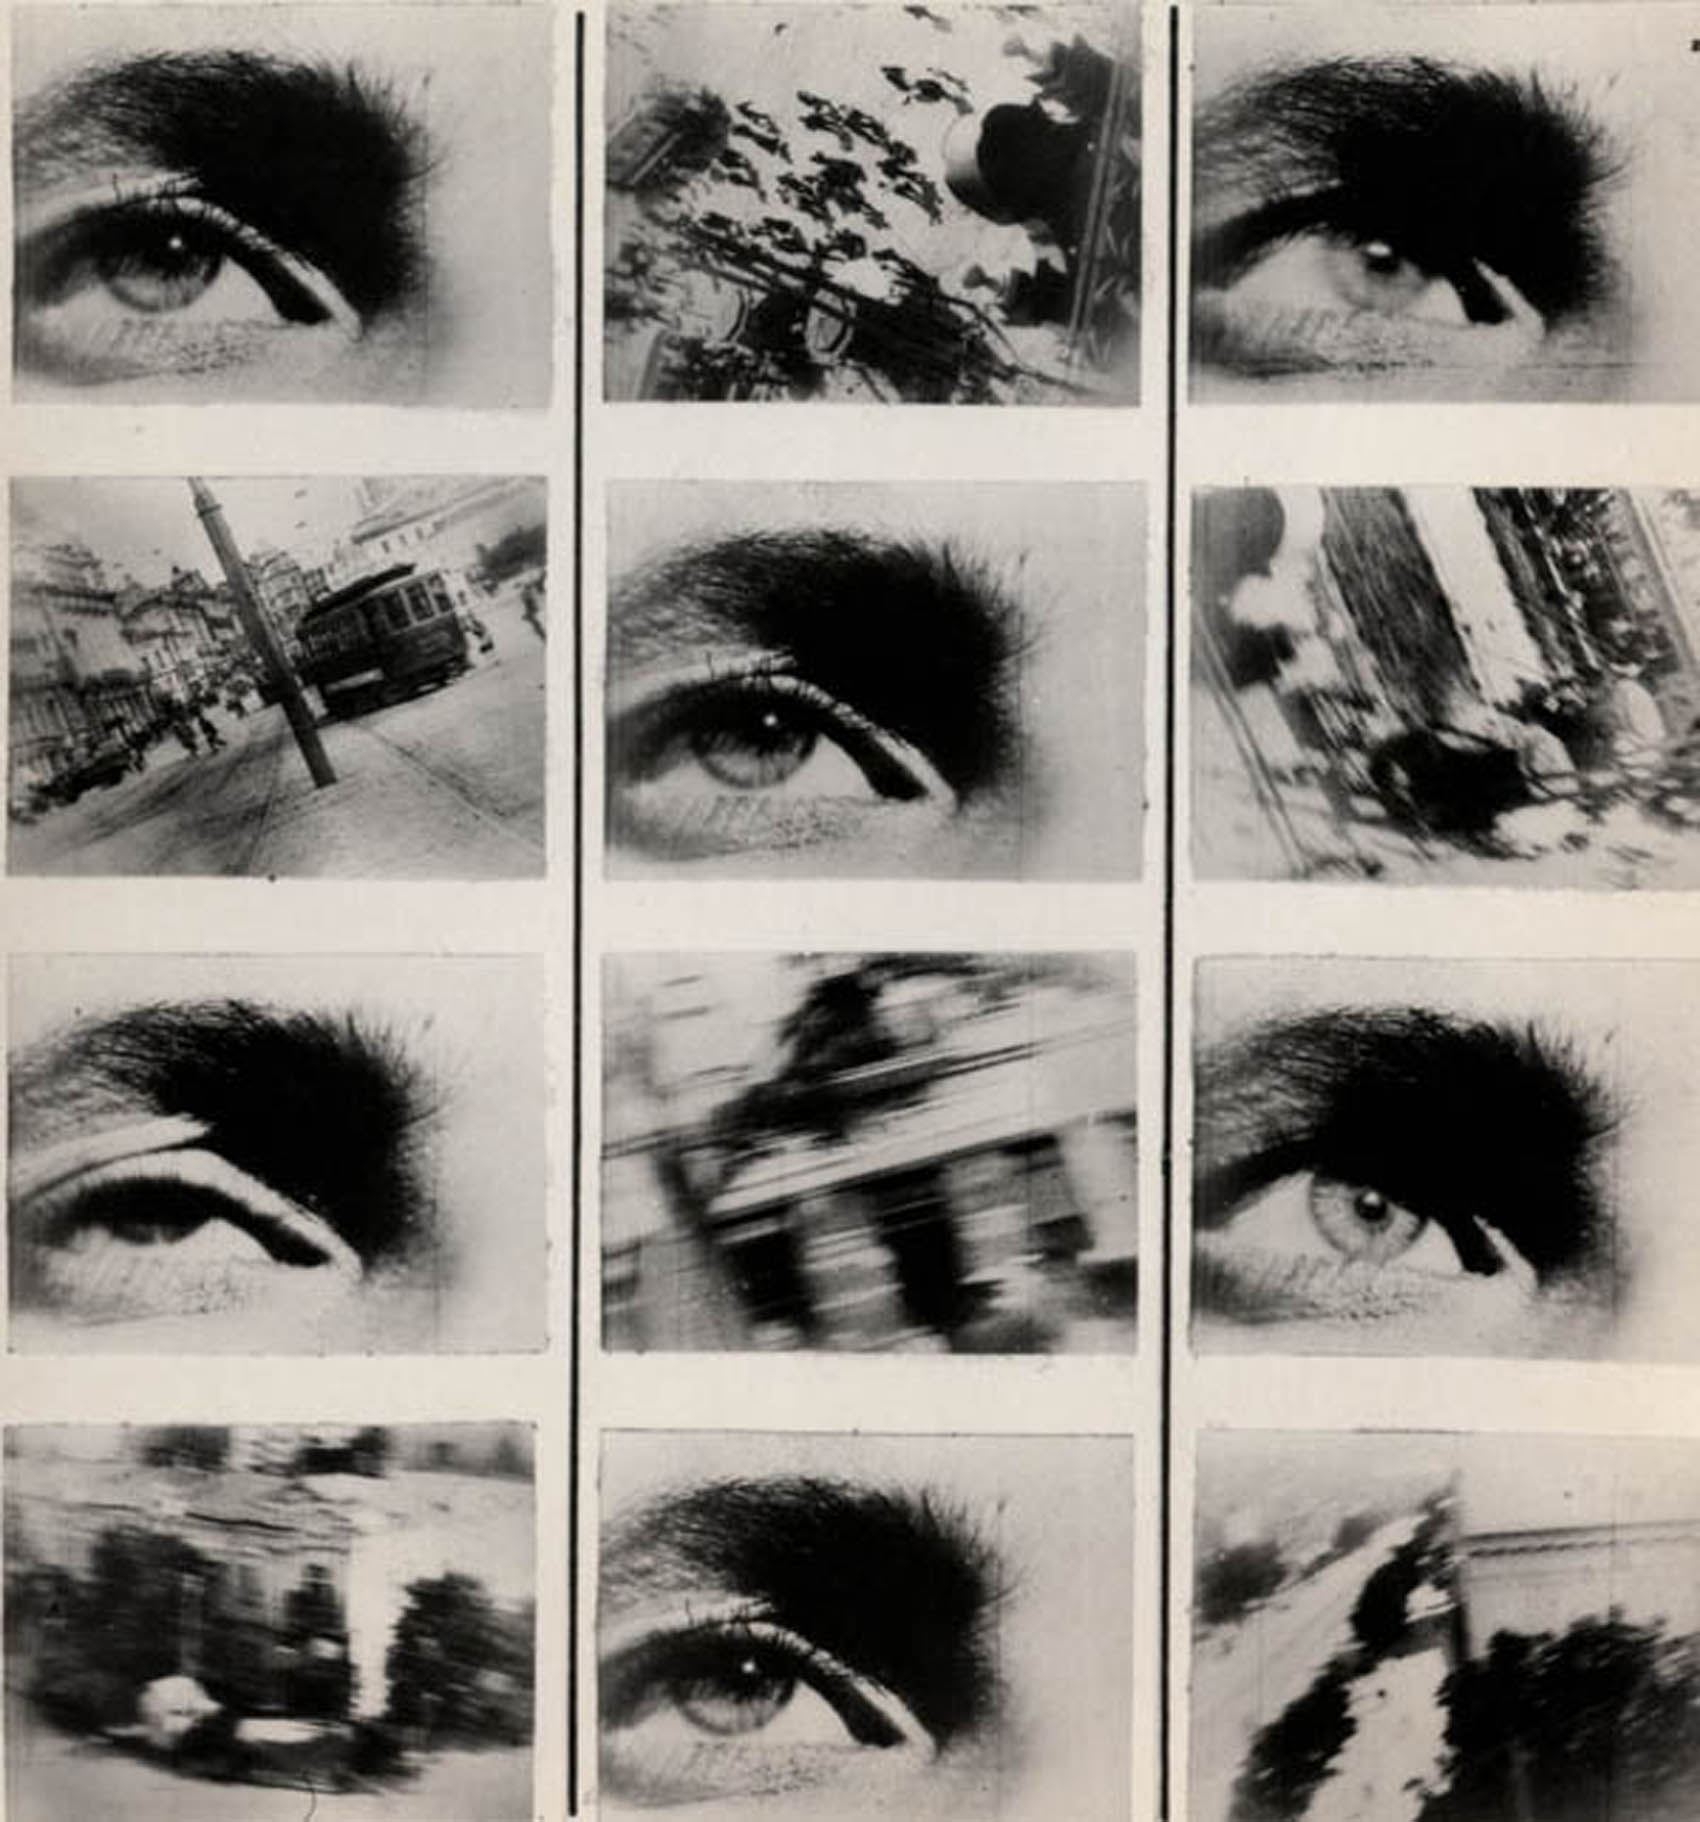 Dziga Vertov "The Man with a Movie Camera" 